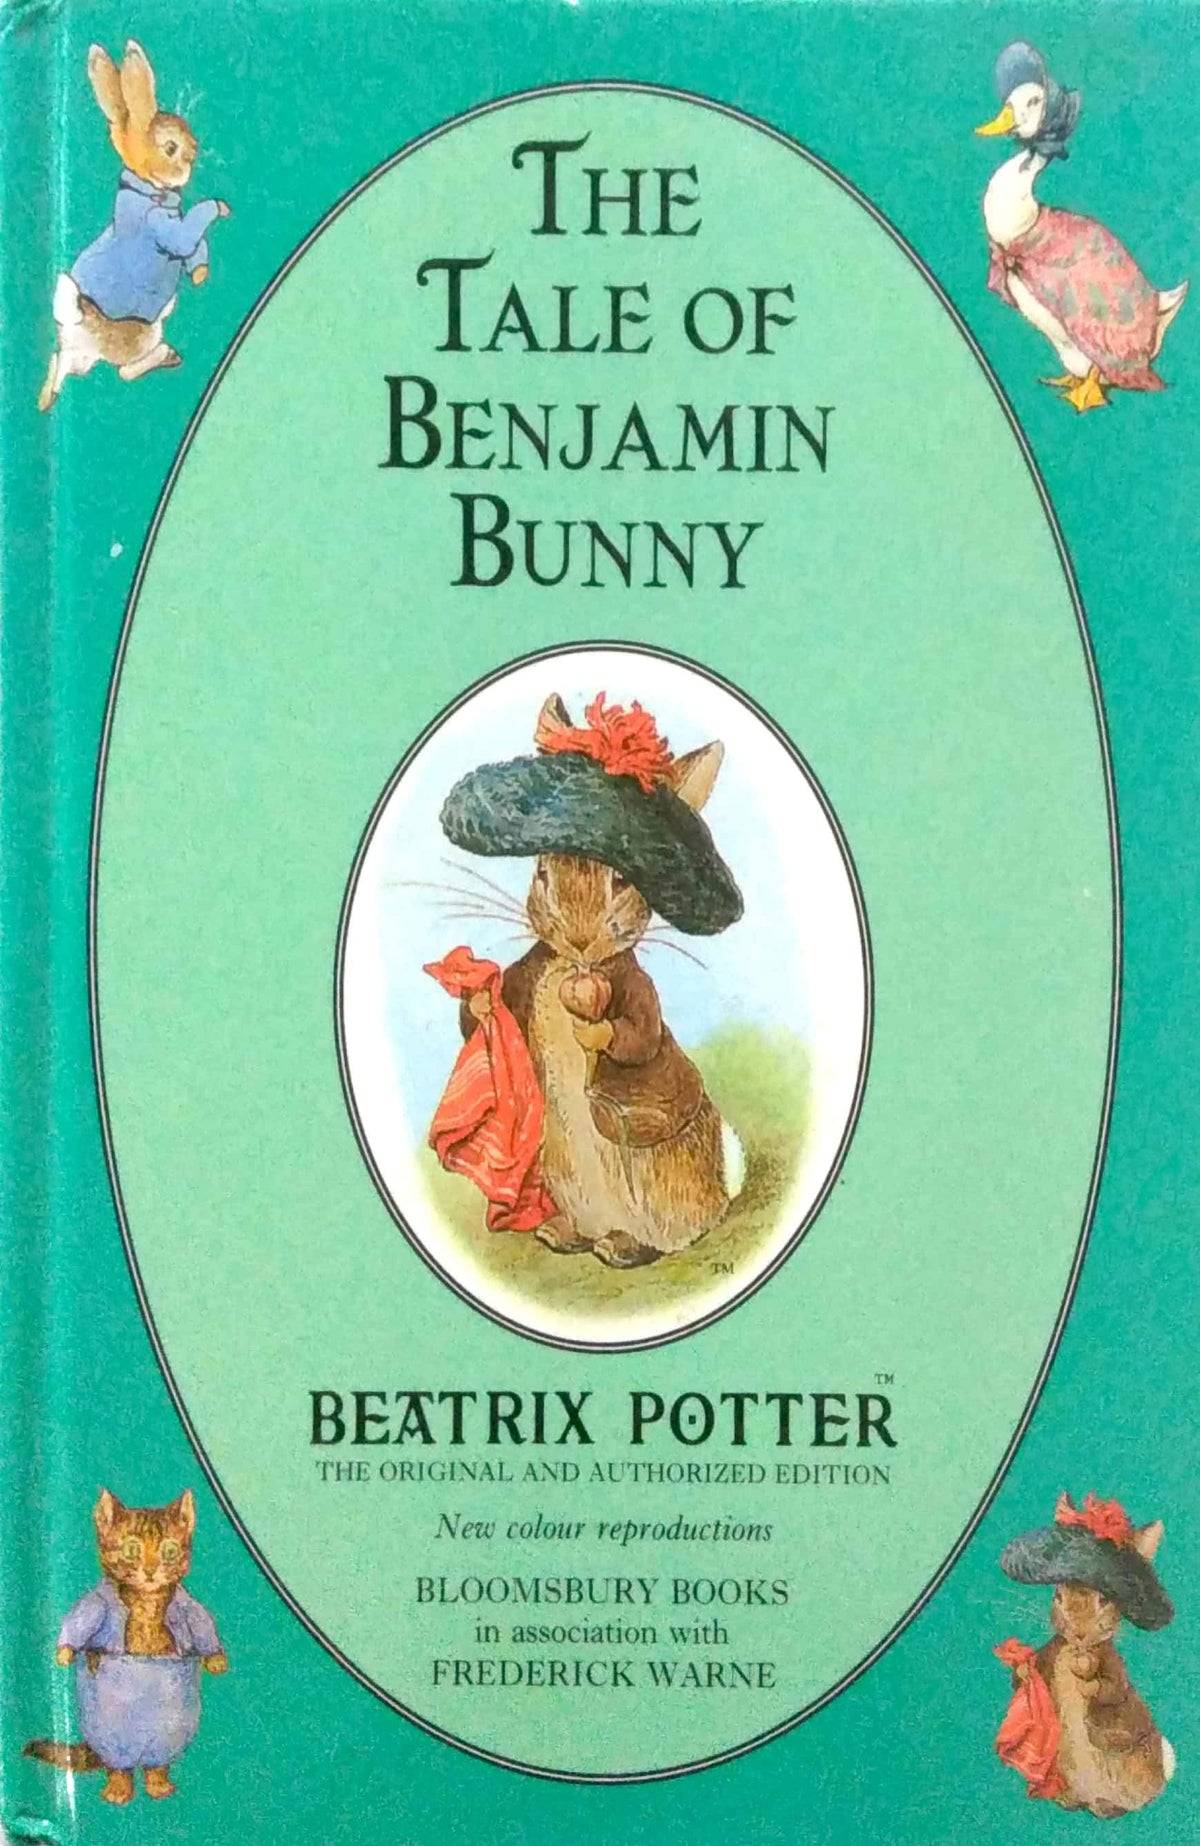 IMG : The Tale of Benjamin Bunny